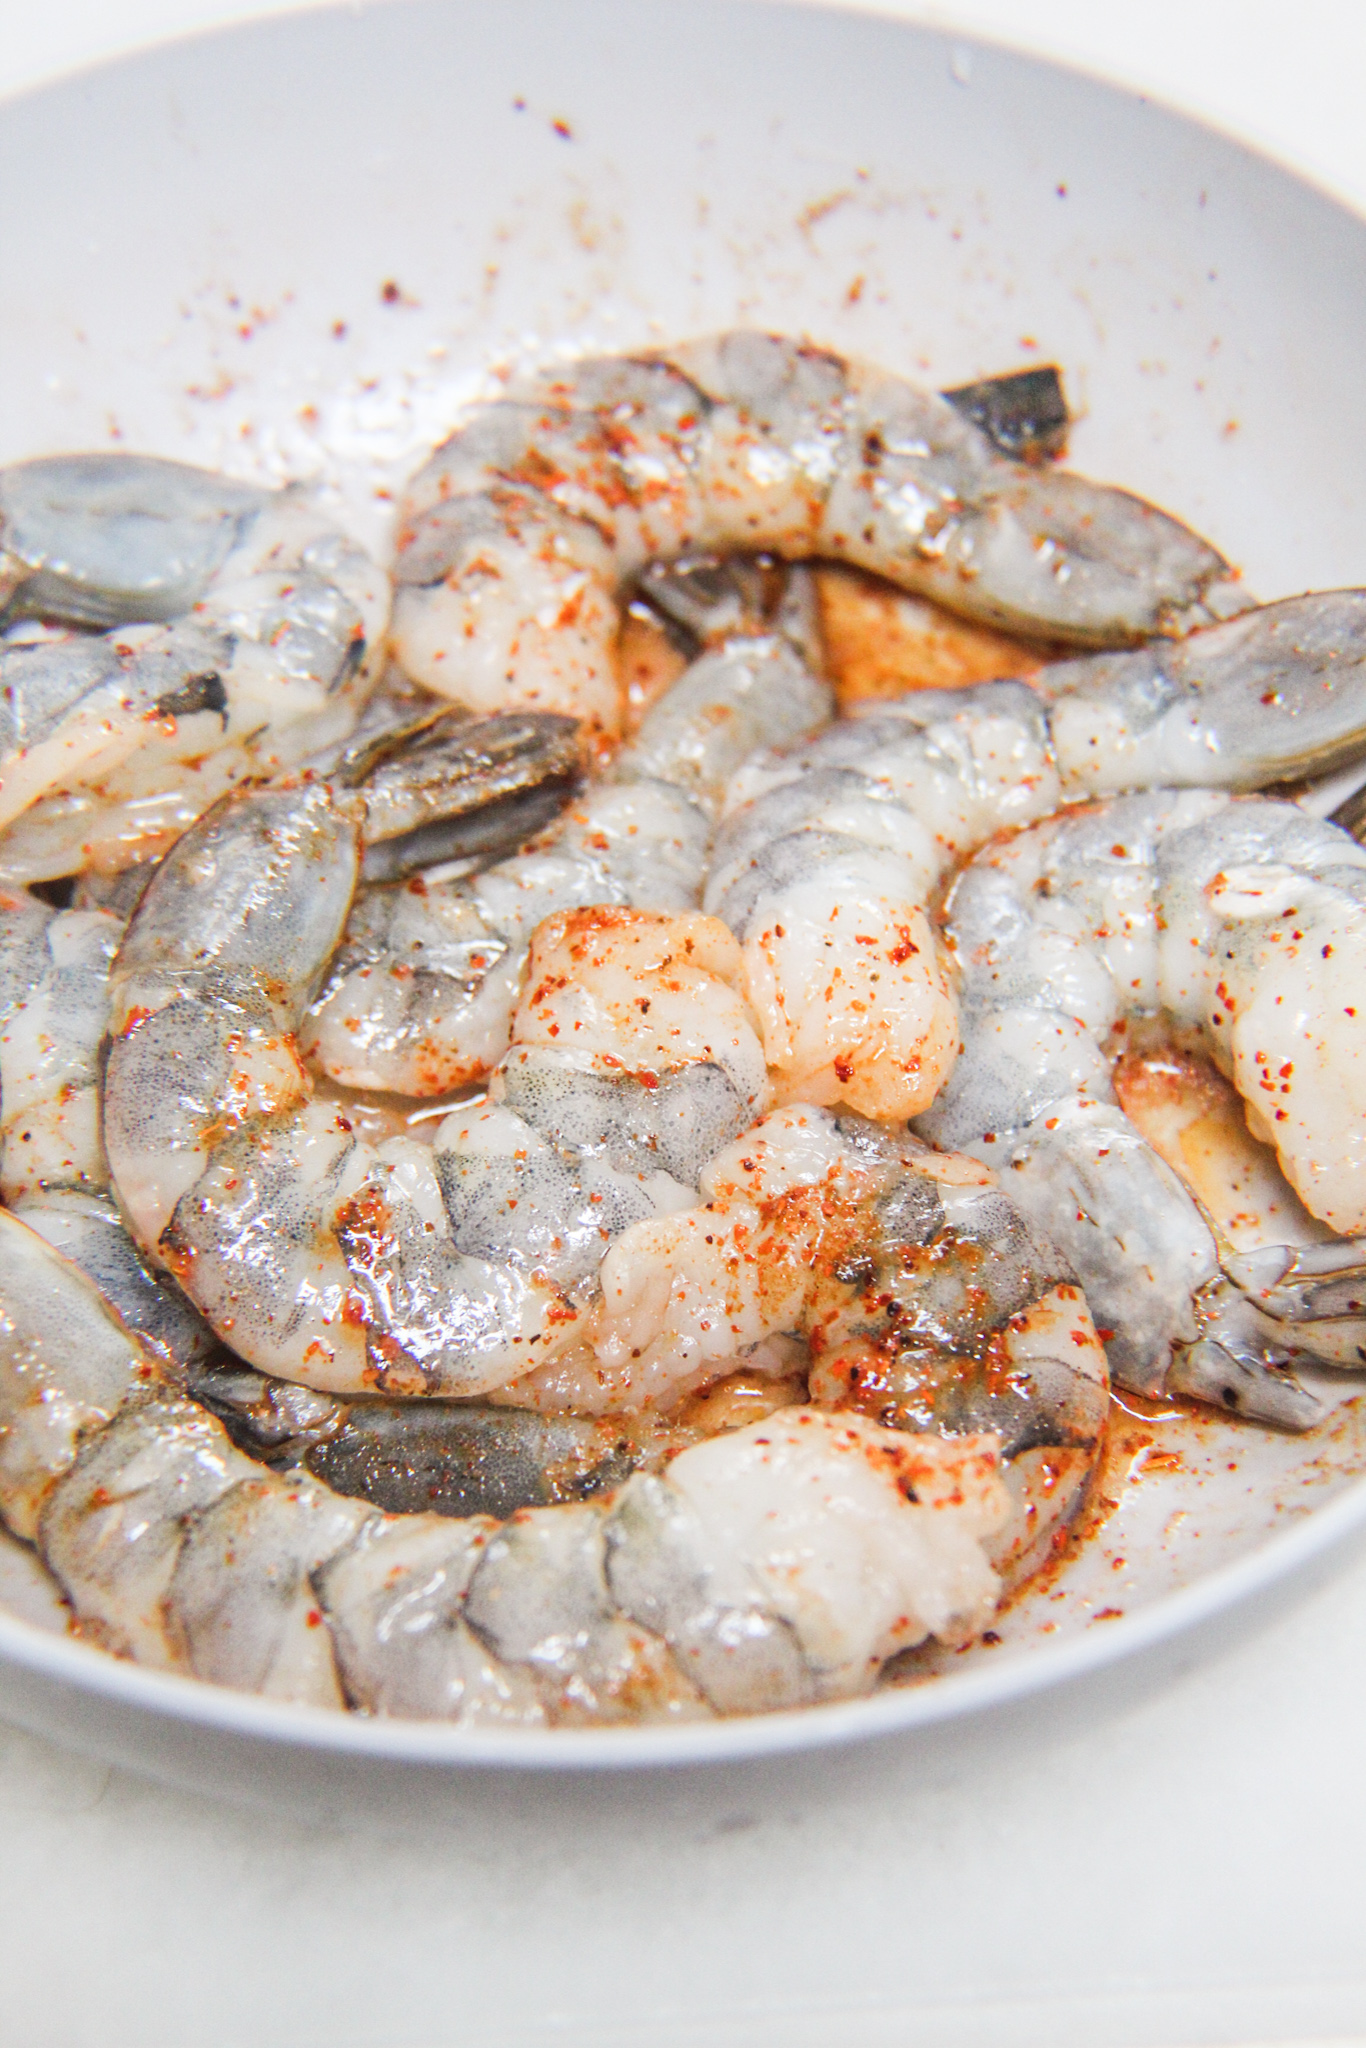 Shrimp marinating